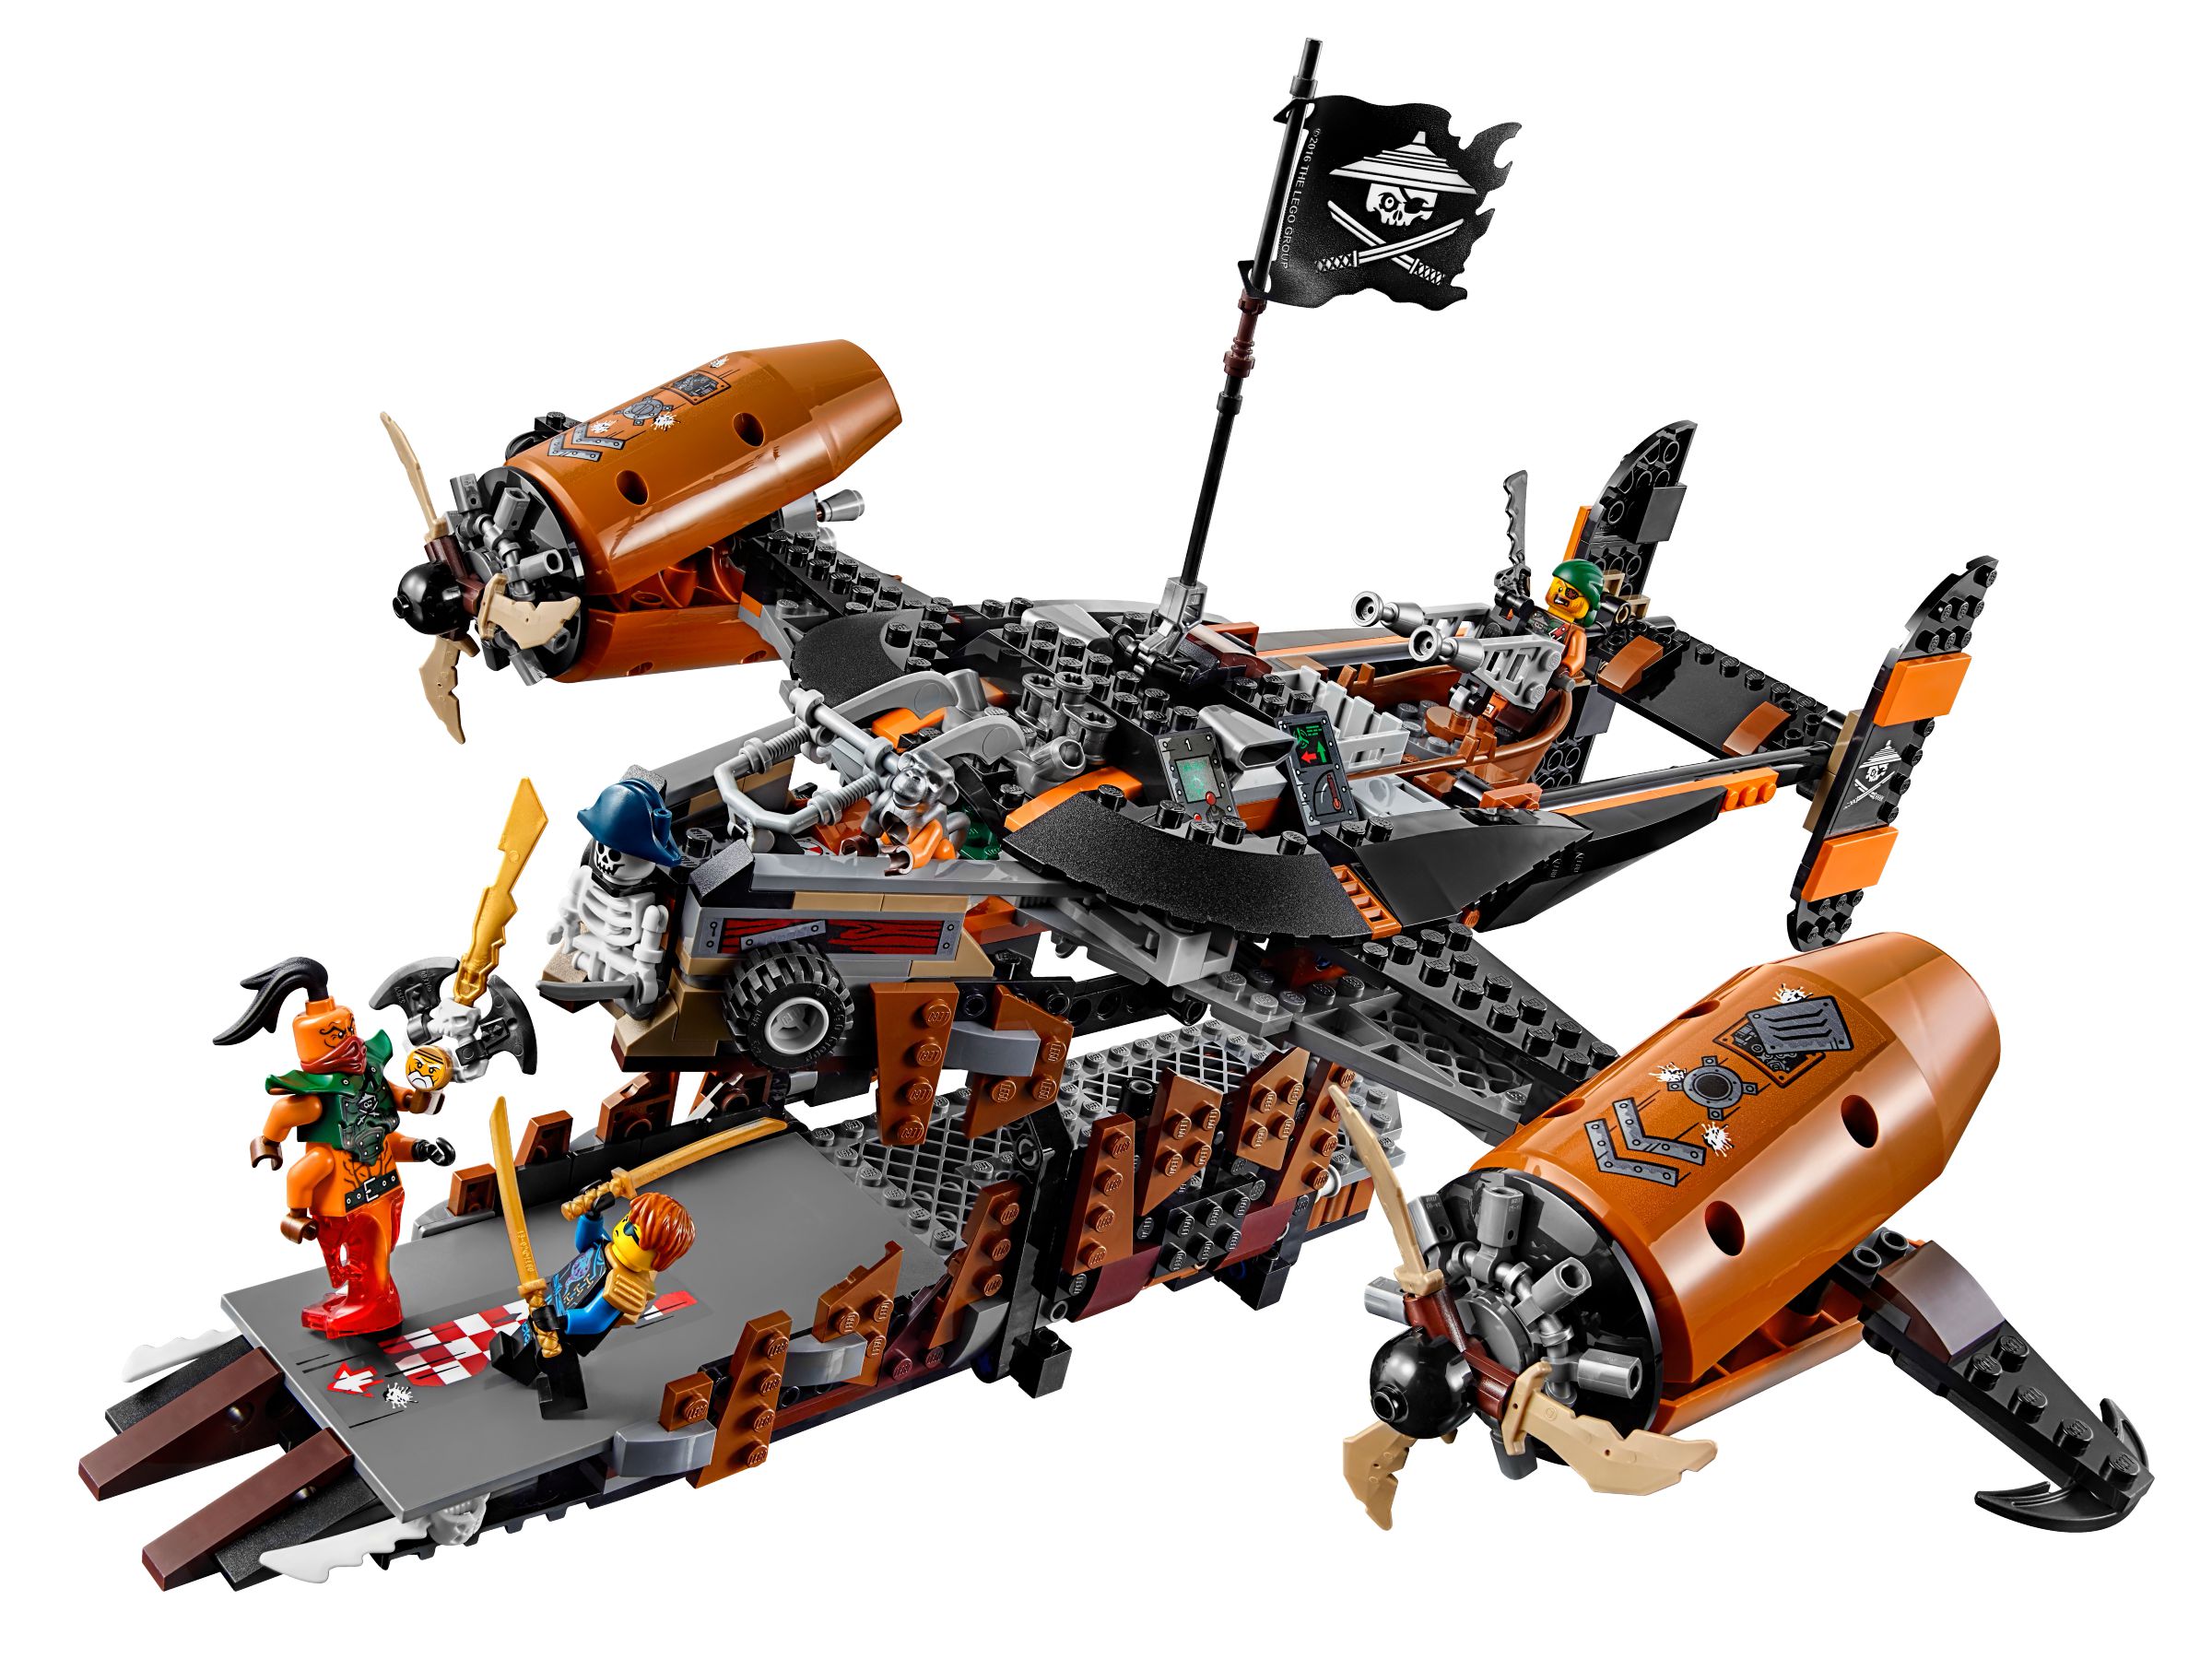 LEGO Ninjago 70605 Luftschiff des Unglücks LEGO_70605_alt2.jpg